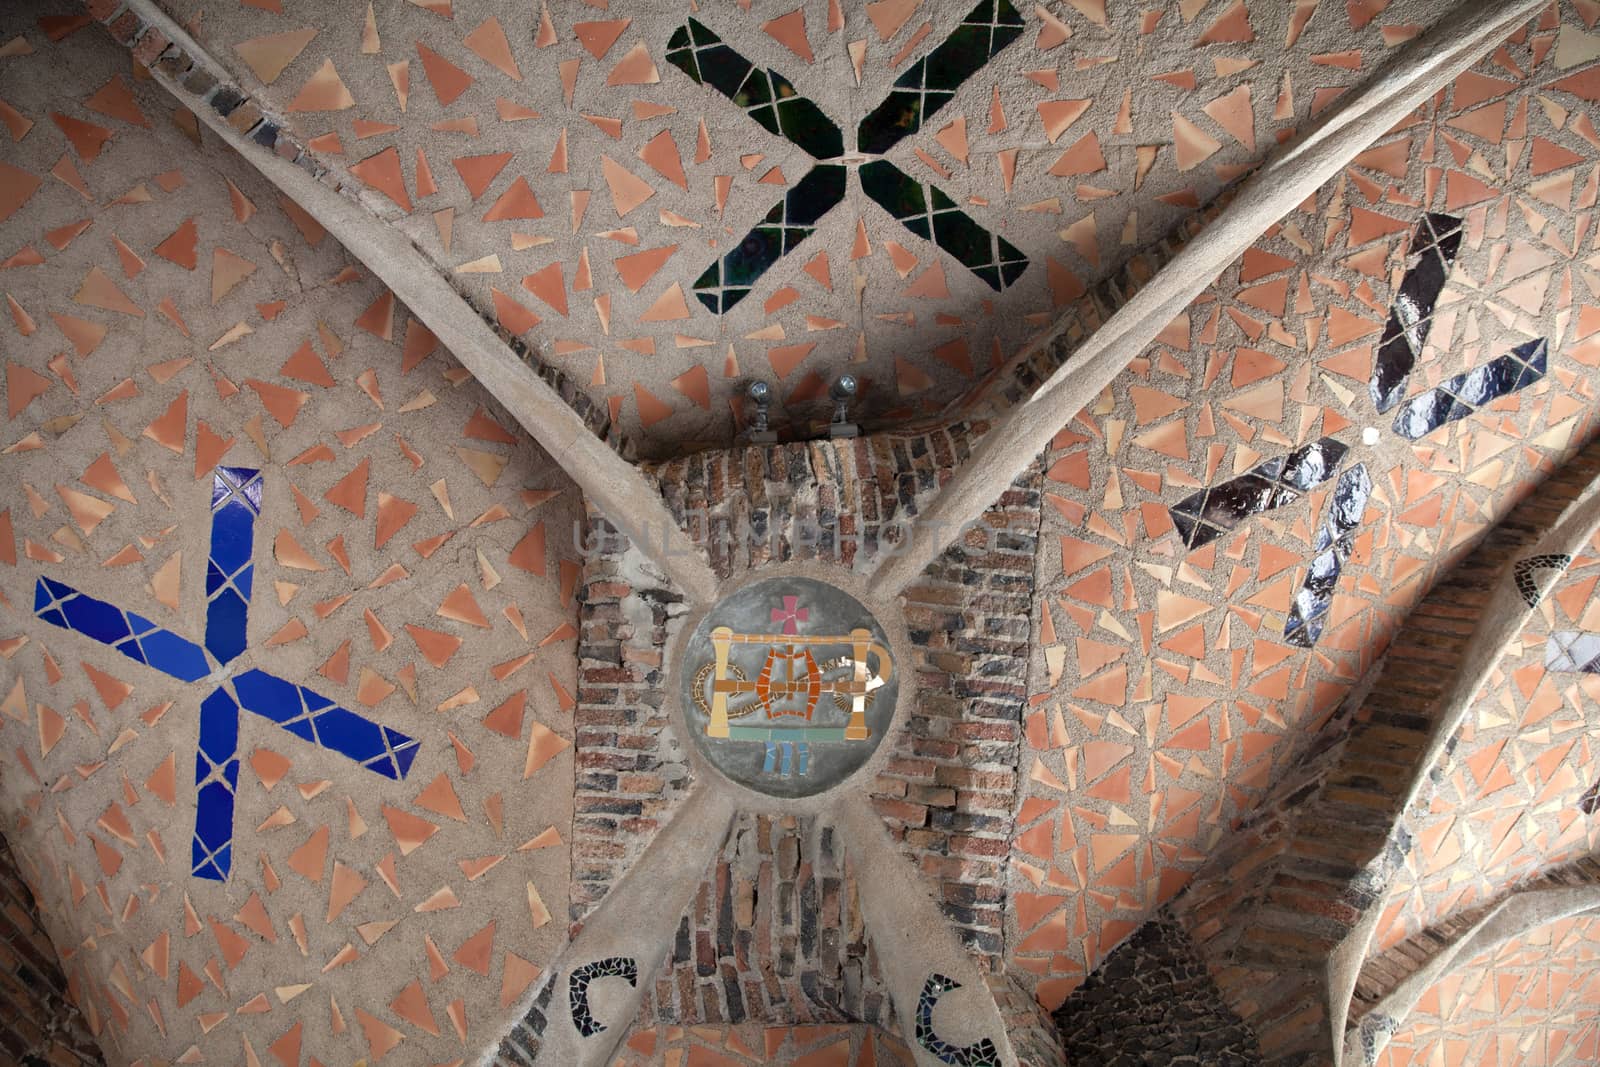 Santa Coloma de Cervello, Spain - 15 January 2019: Church of Colonia Guell ceiling close-up